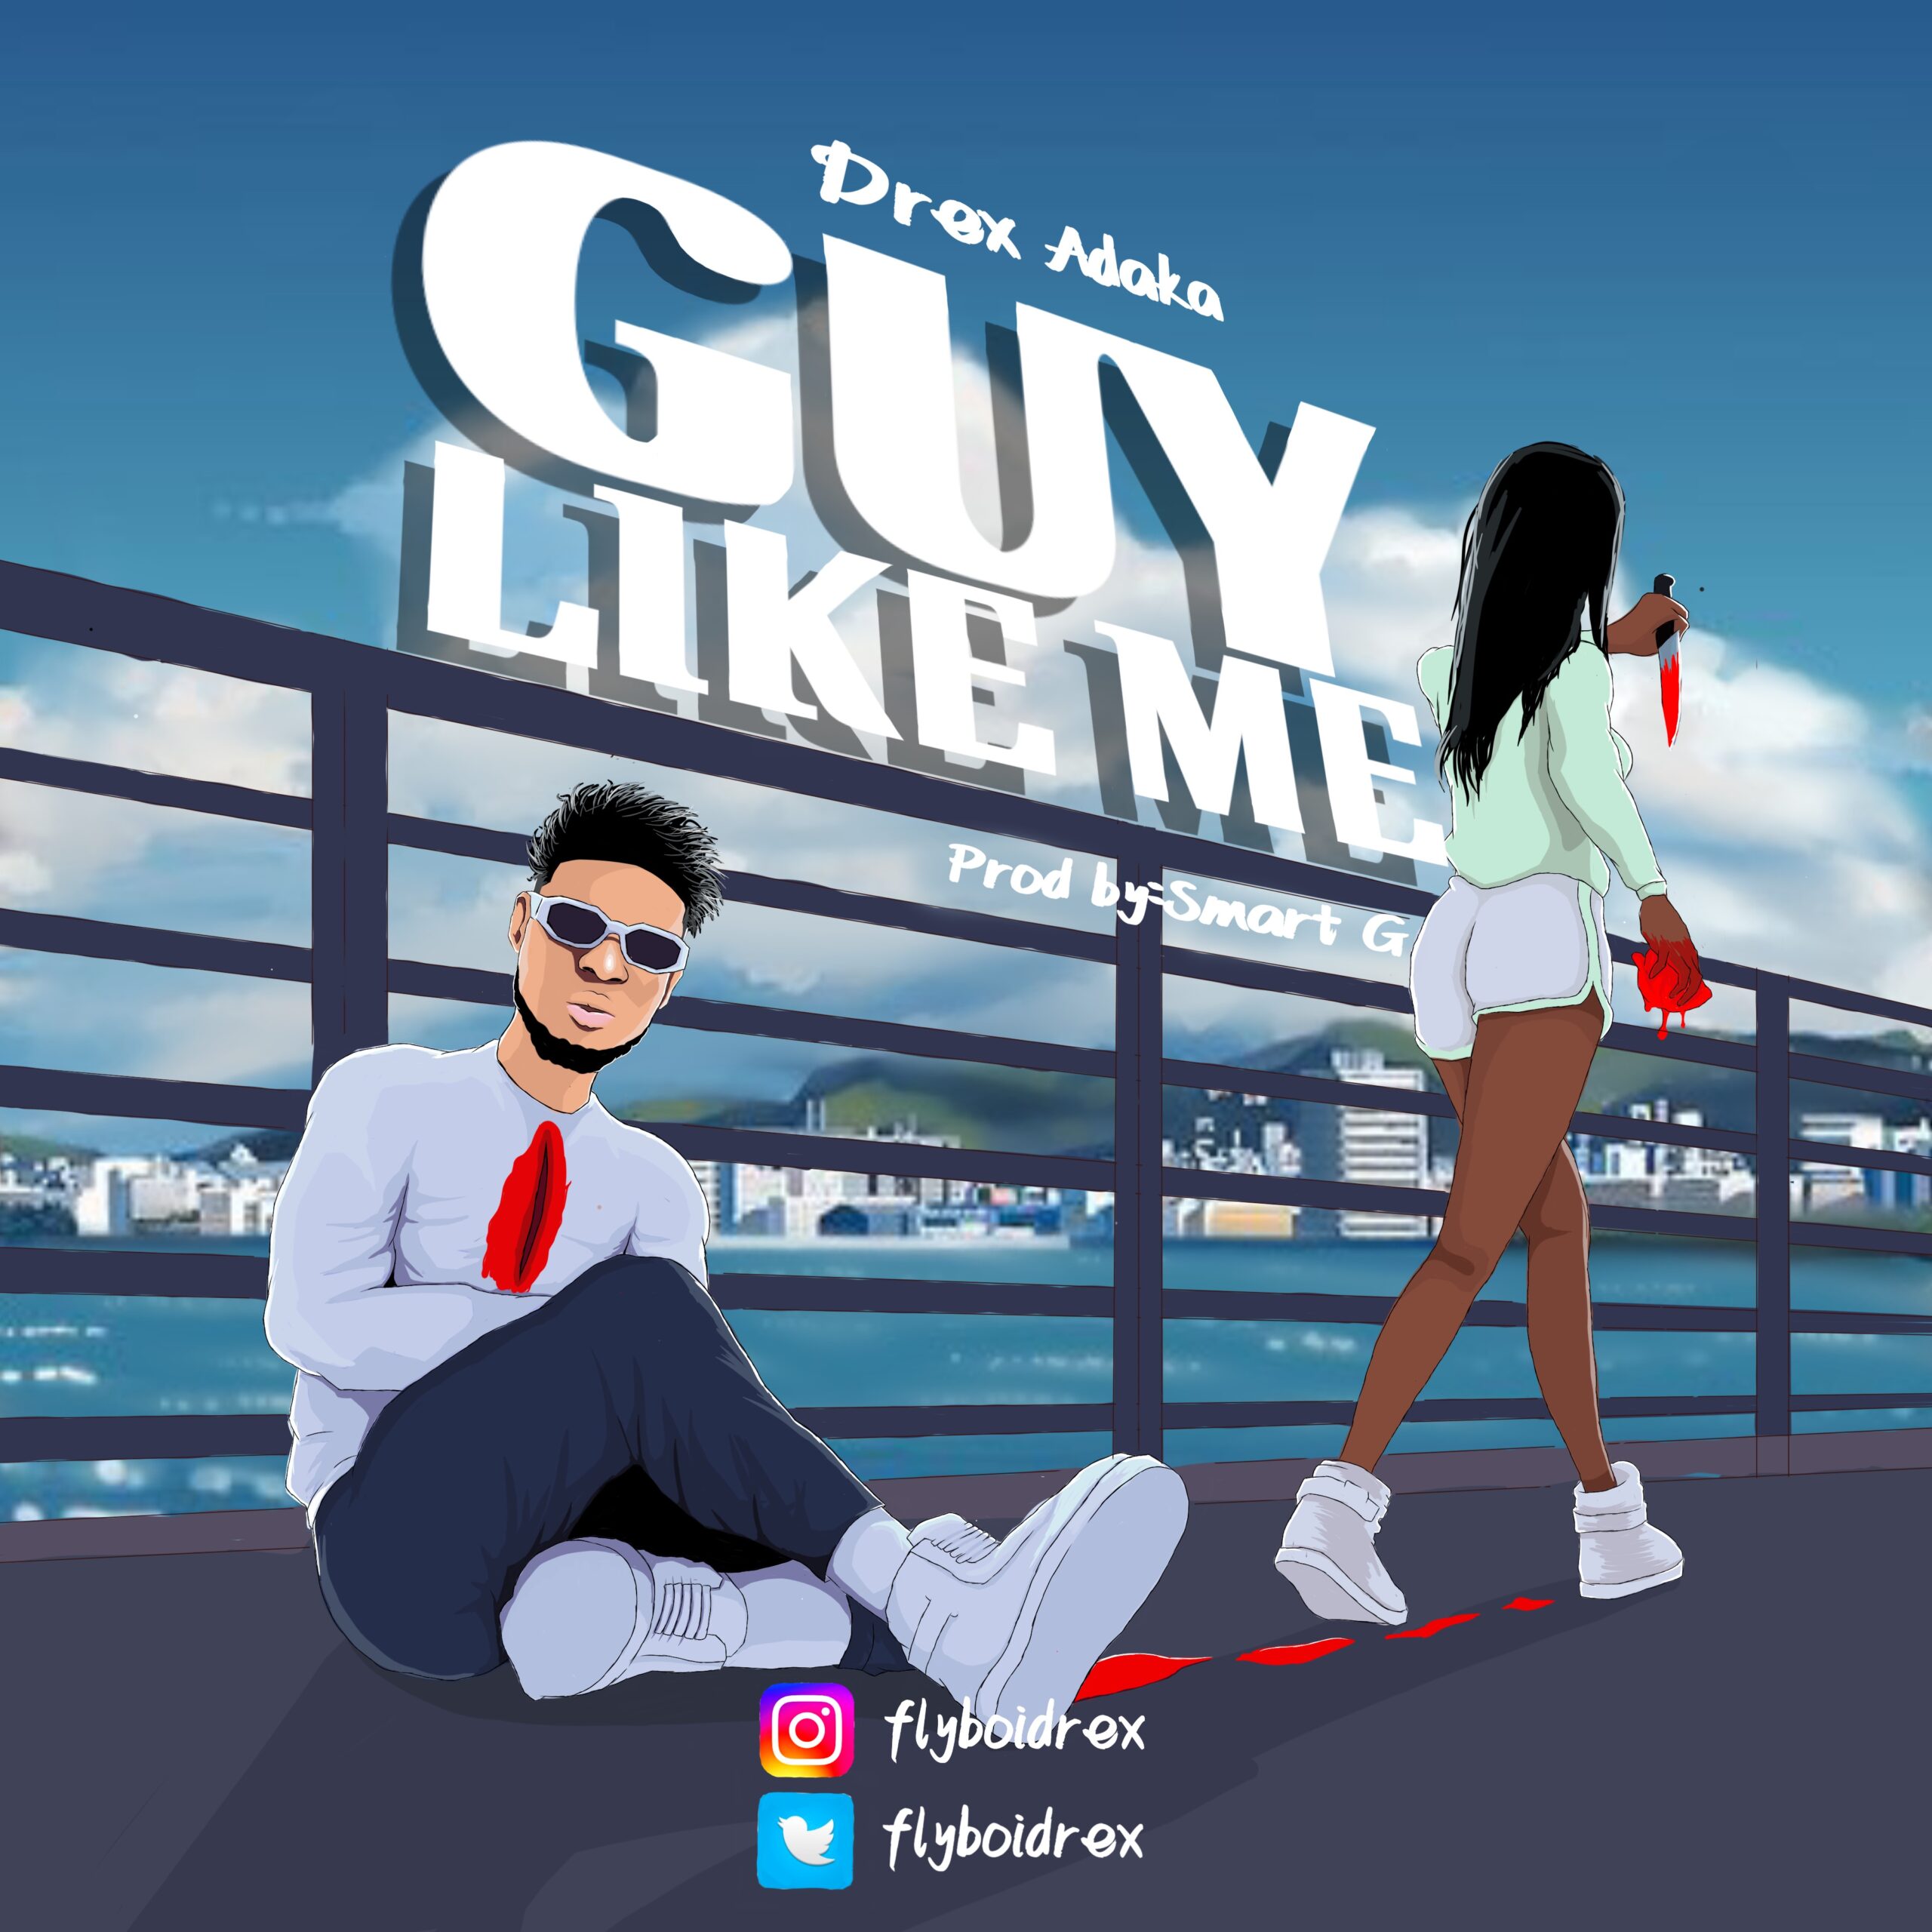 Drex Adaka -"Guy Like Me" 23